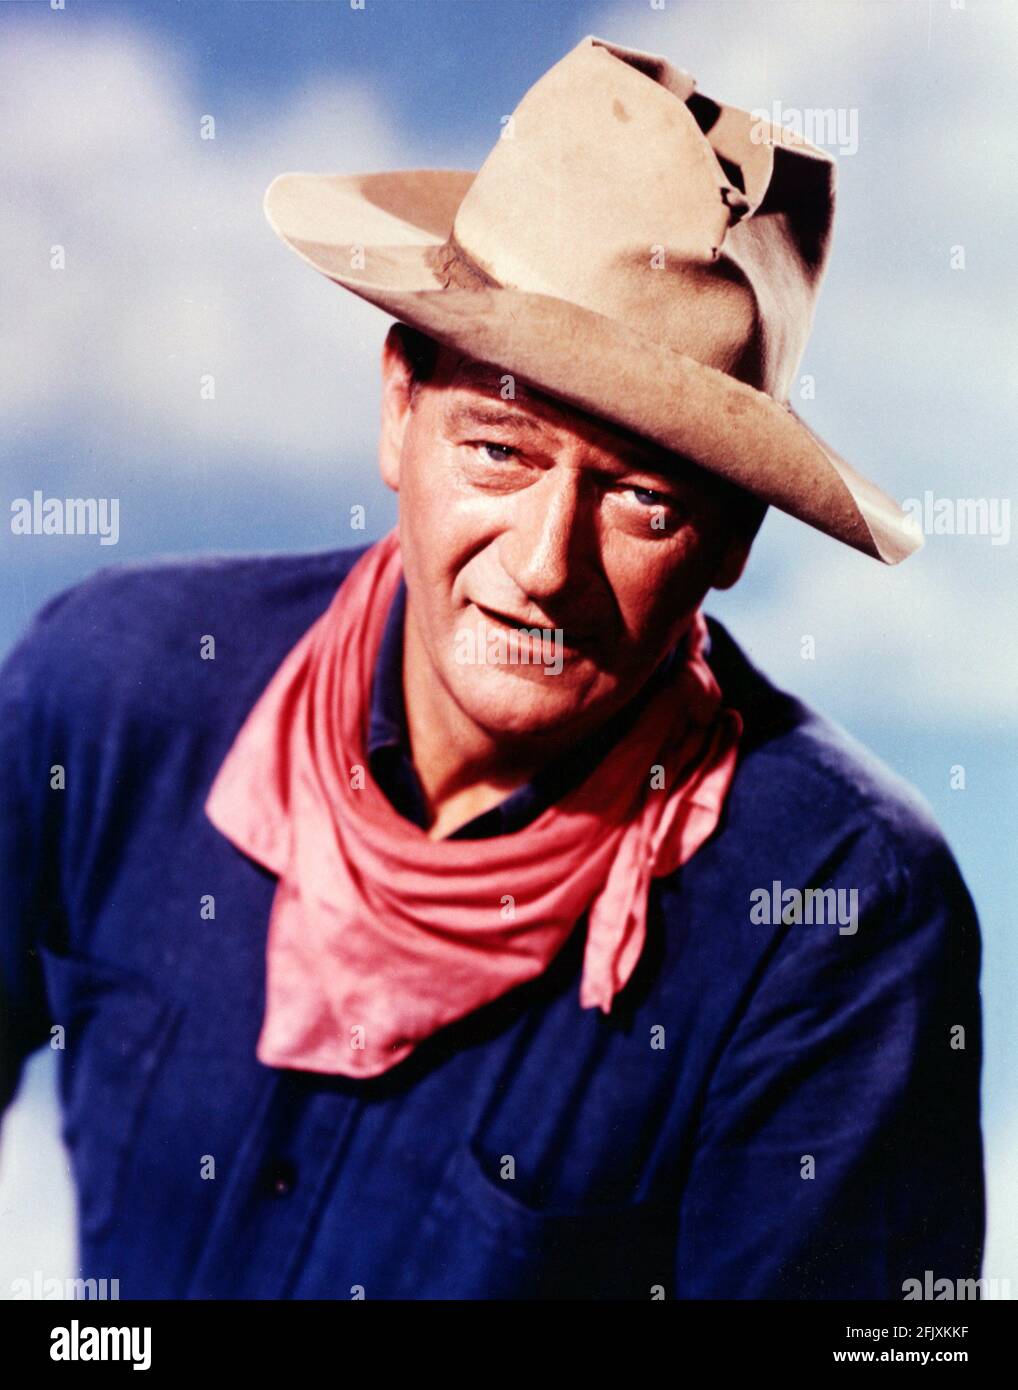 1956 , USA : The movie actor  JOHN  WAYNE  ( 1907 - 1979 ) in THE SEARCHERS ( Sentieri selvaggi ) by John Ford -  FILM - CINEMA - attore cinematografico -  cappello - hat - prtrait - ritratto - WESTERN - WILDE WEST - cowboy - foulard - bandanna - JEANS shirt - camicia  ----  Archivio GBB Stock Photo